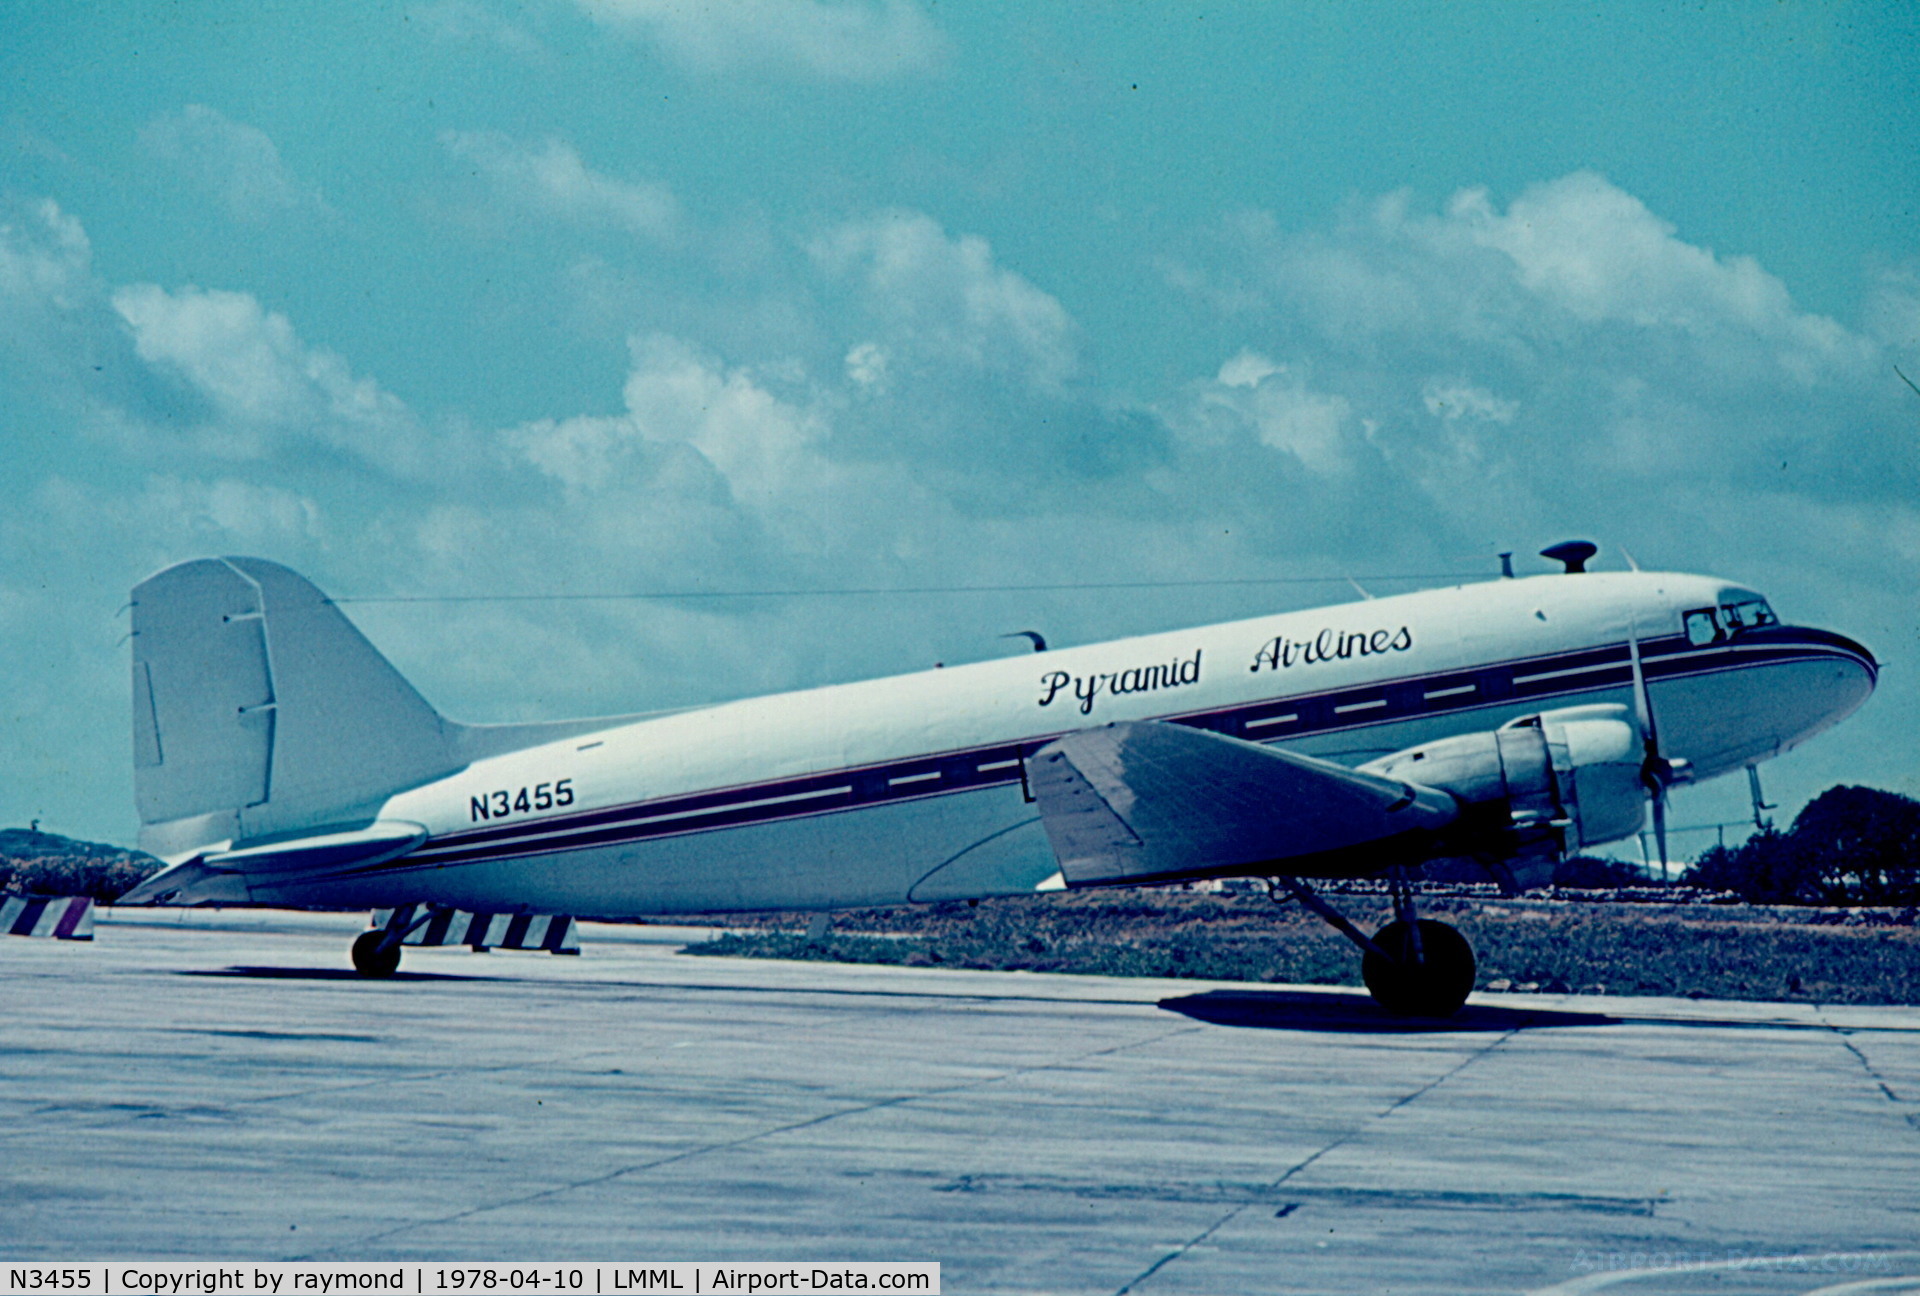 N3455, Douglas C-47B Skytrain C/N 16631, DC3 N3455 Pyramid Airlines